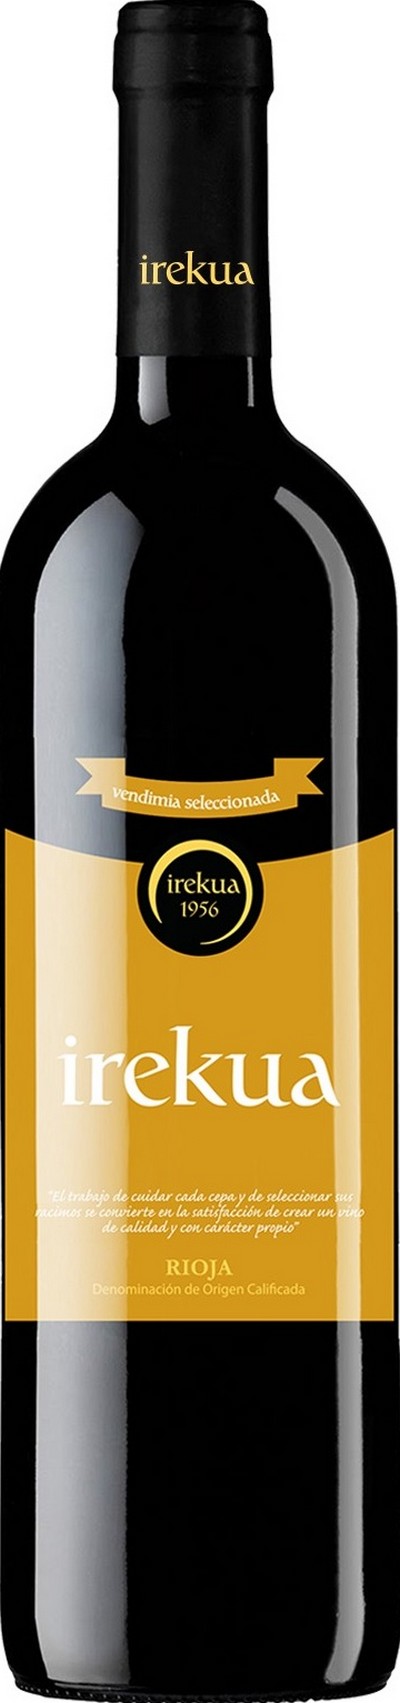 irekua-vendimia-seleccionada-2014